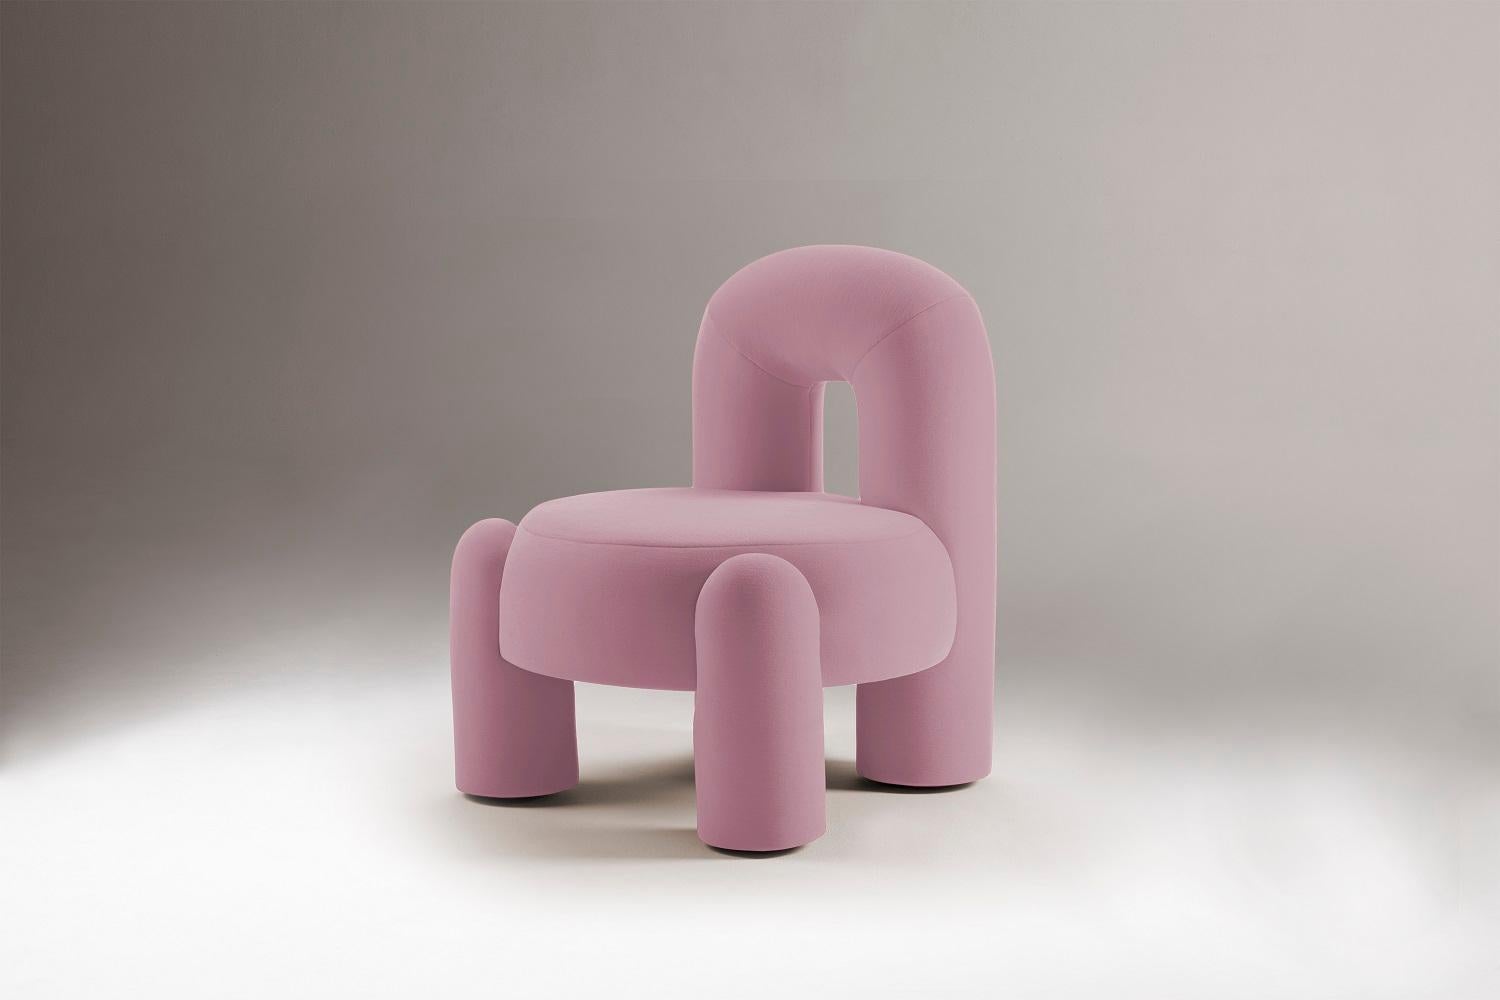 Portuguese DOOQ! Milan NEW! Organic Modern Marlon Armchair, Pink Kvadrat by P.Franceschini For Sale